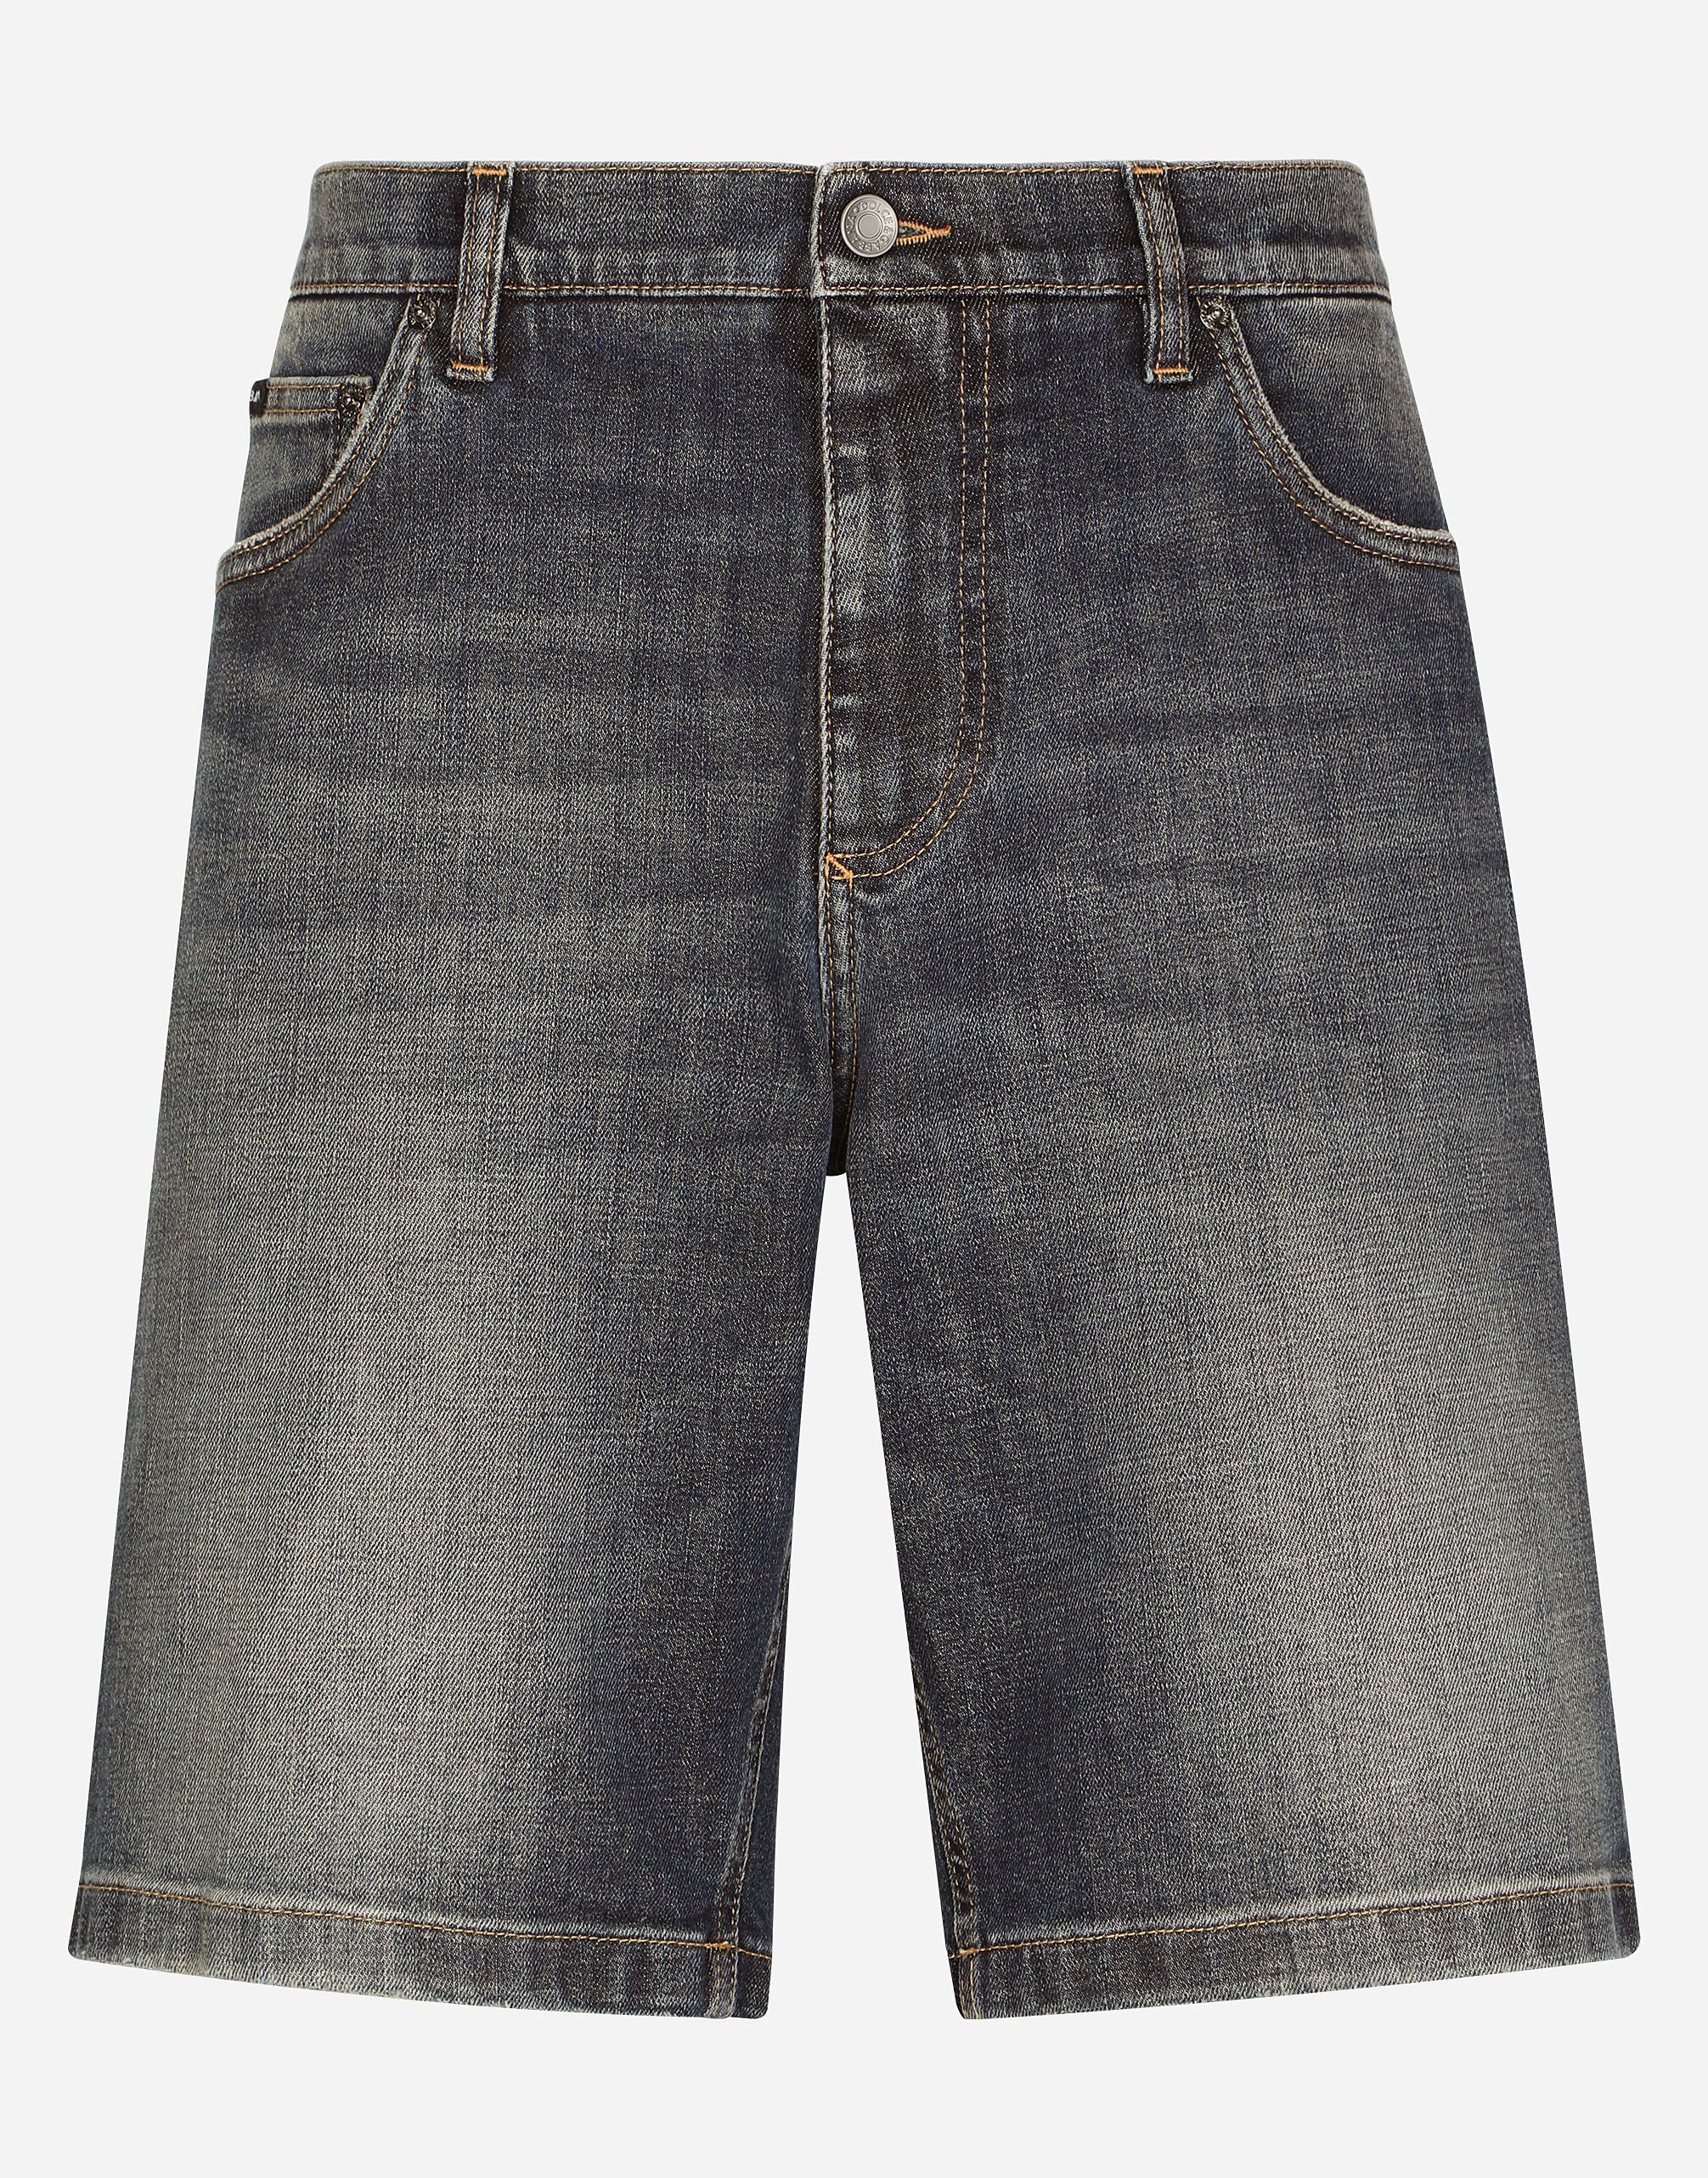 Dolce & Gabbana Bermuda jeans stretch blu chiaro lavato Nero VG4390VP187